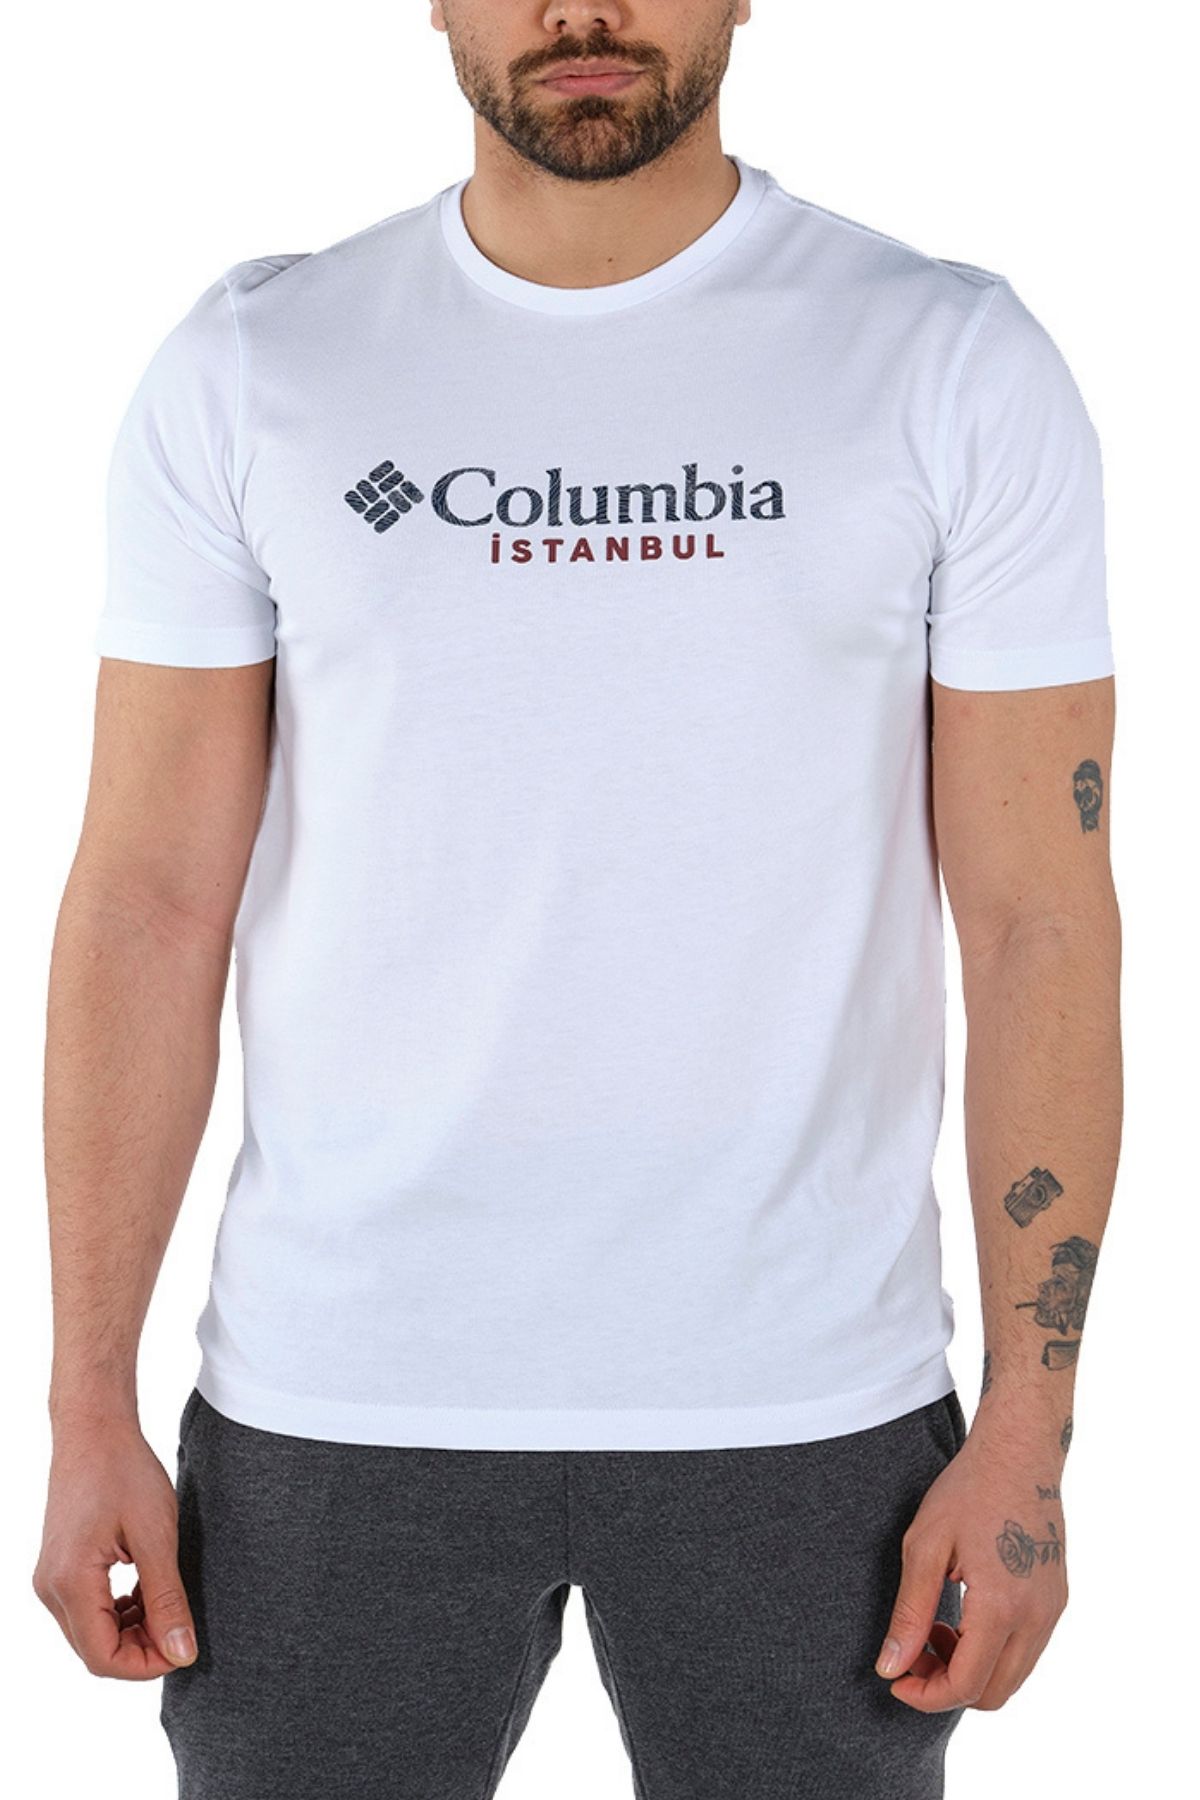 Columbia Erkek Beyaz T-shirt 9120170100-100